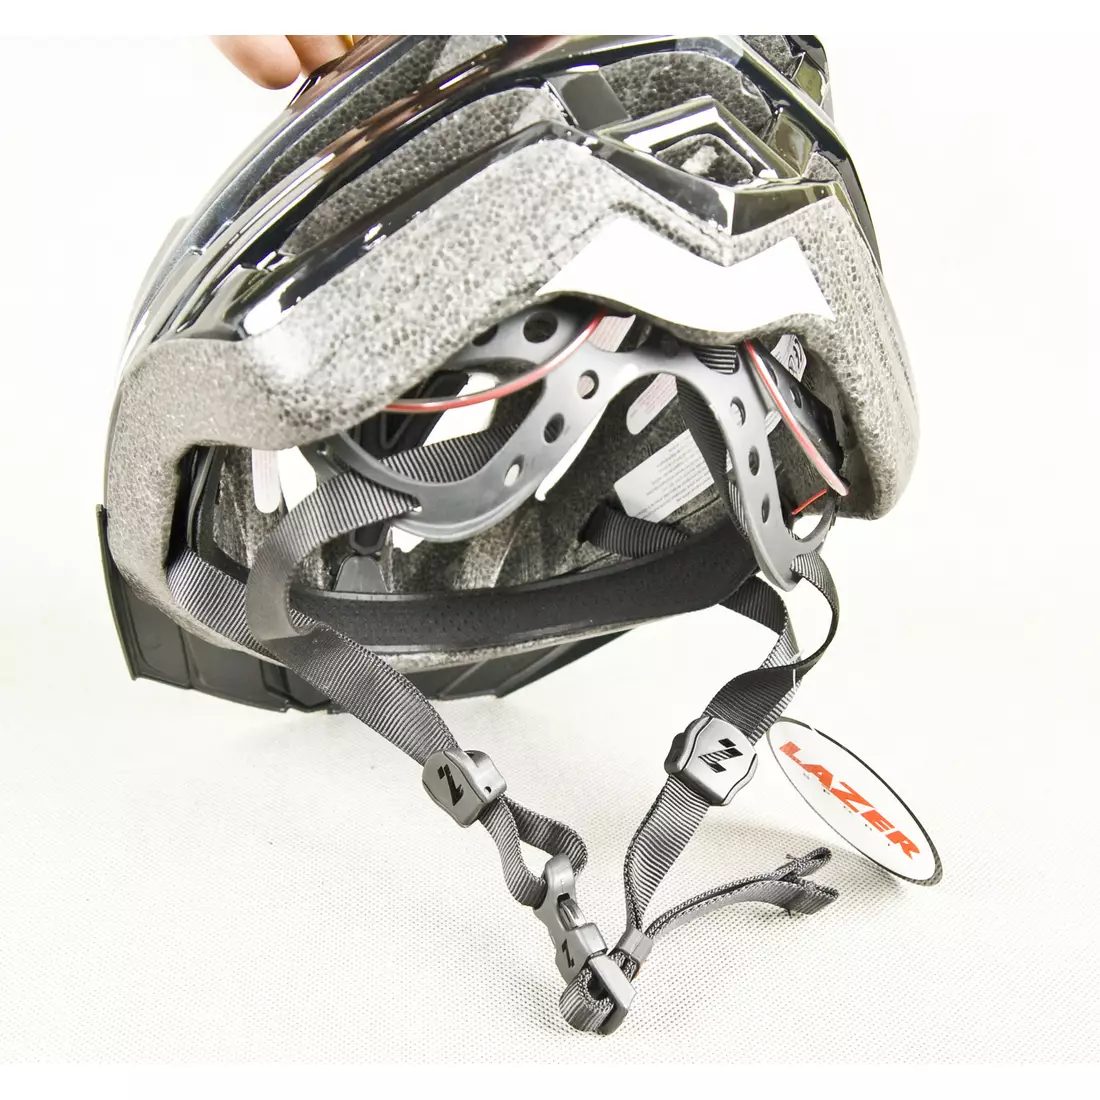 LAZER VANDAL MTB bicycle helmet, black-titanium